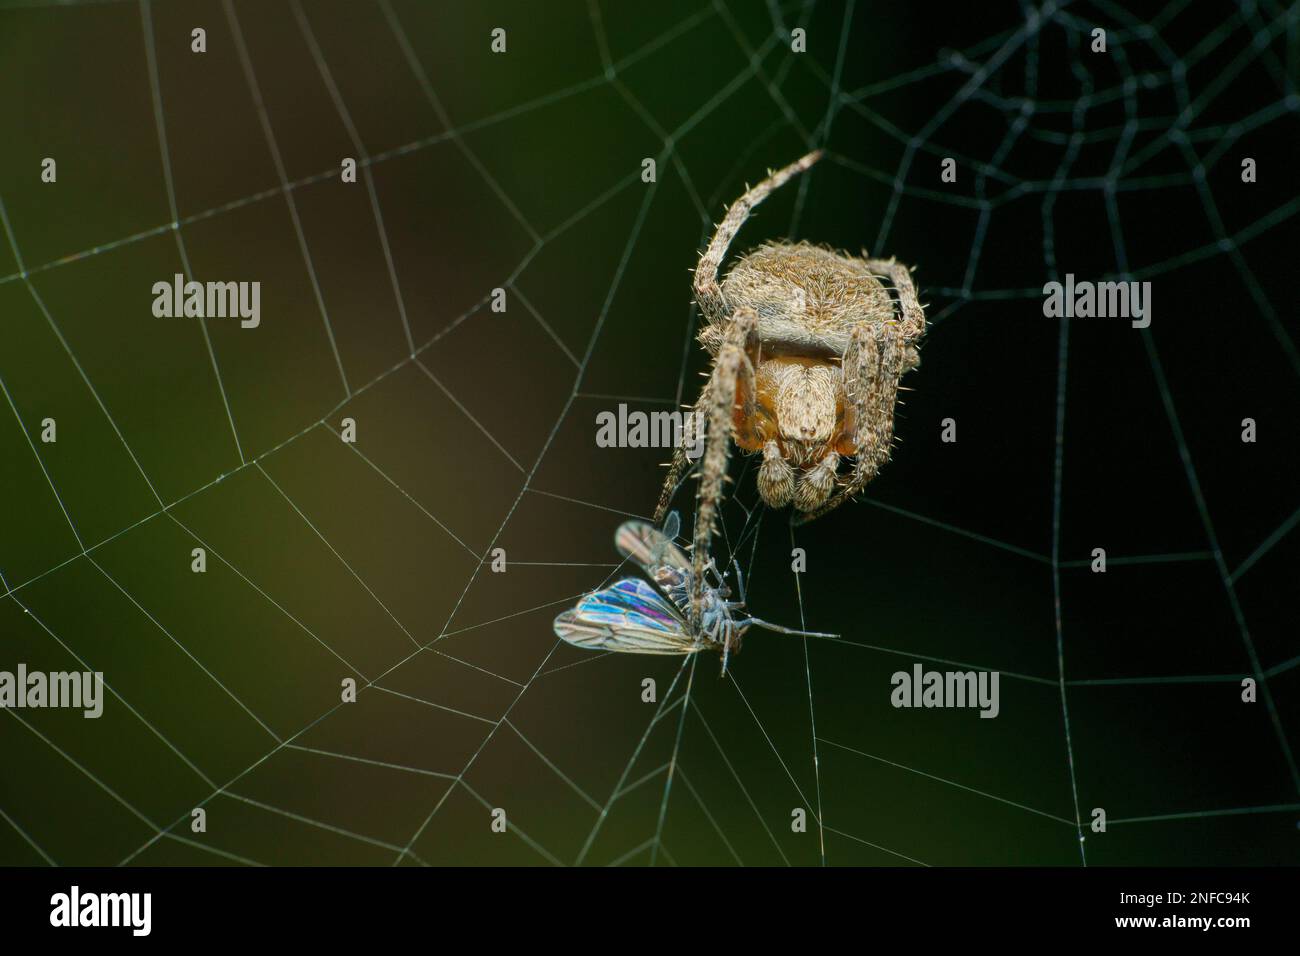 Orb weaver spider with prey on web, Satara, Maharashtra, India Stock Photo